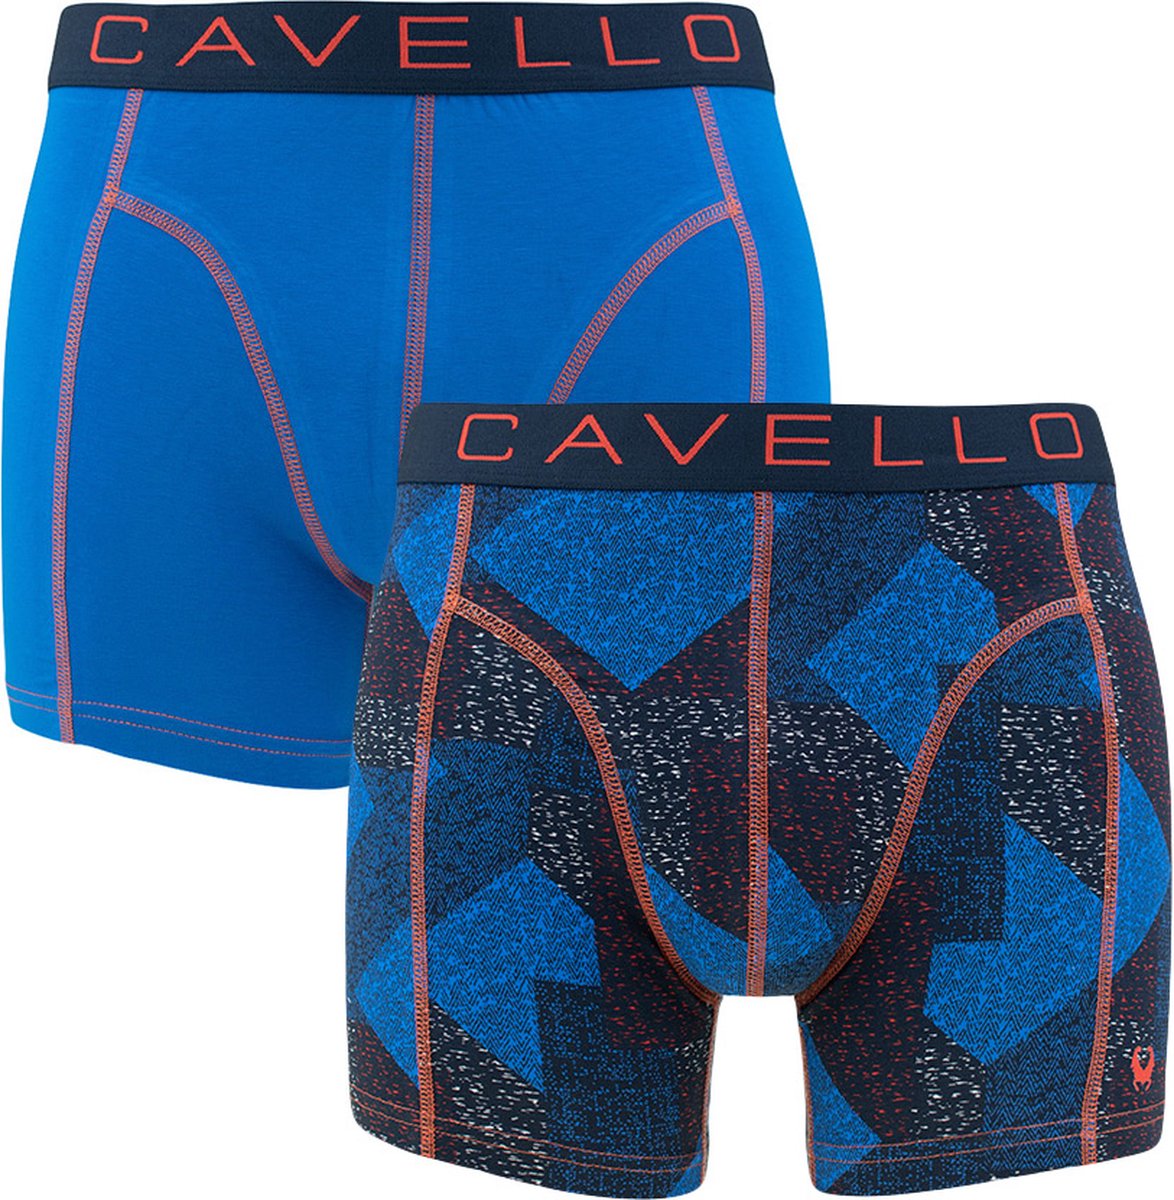 Cavello 2P boxers blocks multi - XL